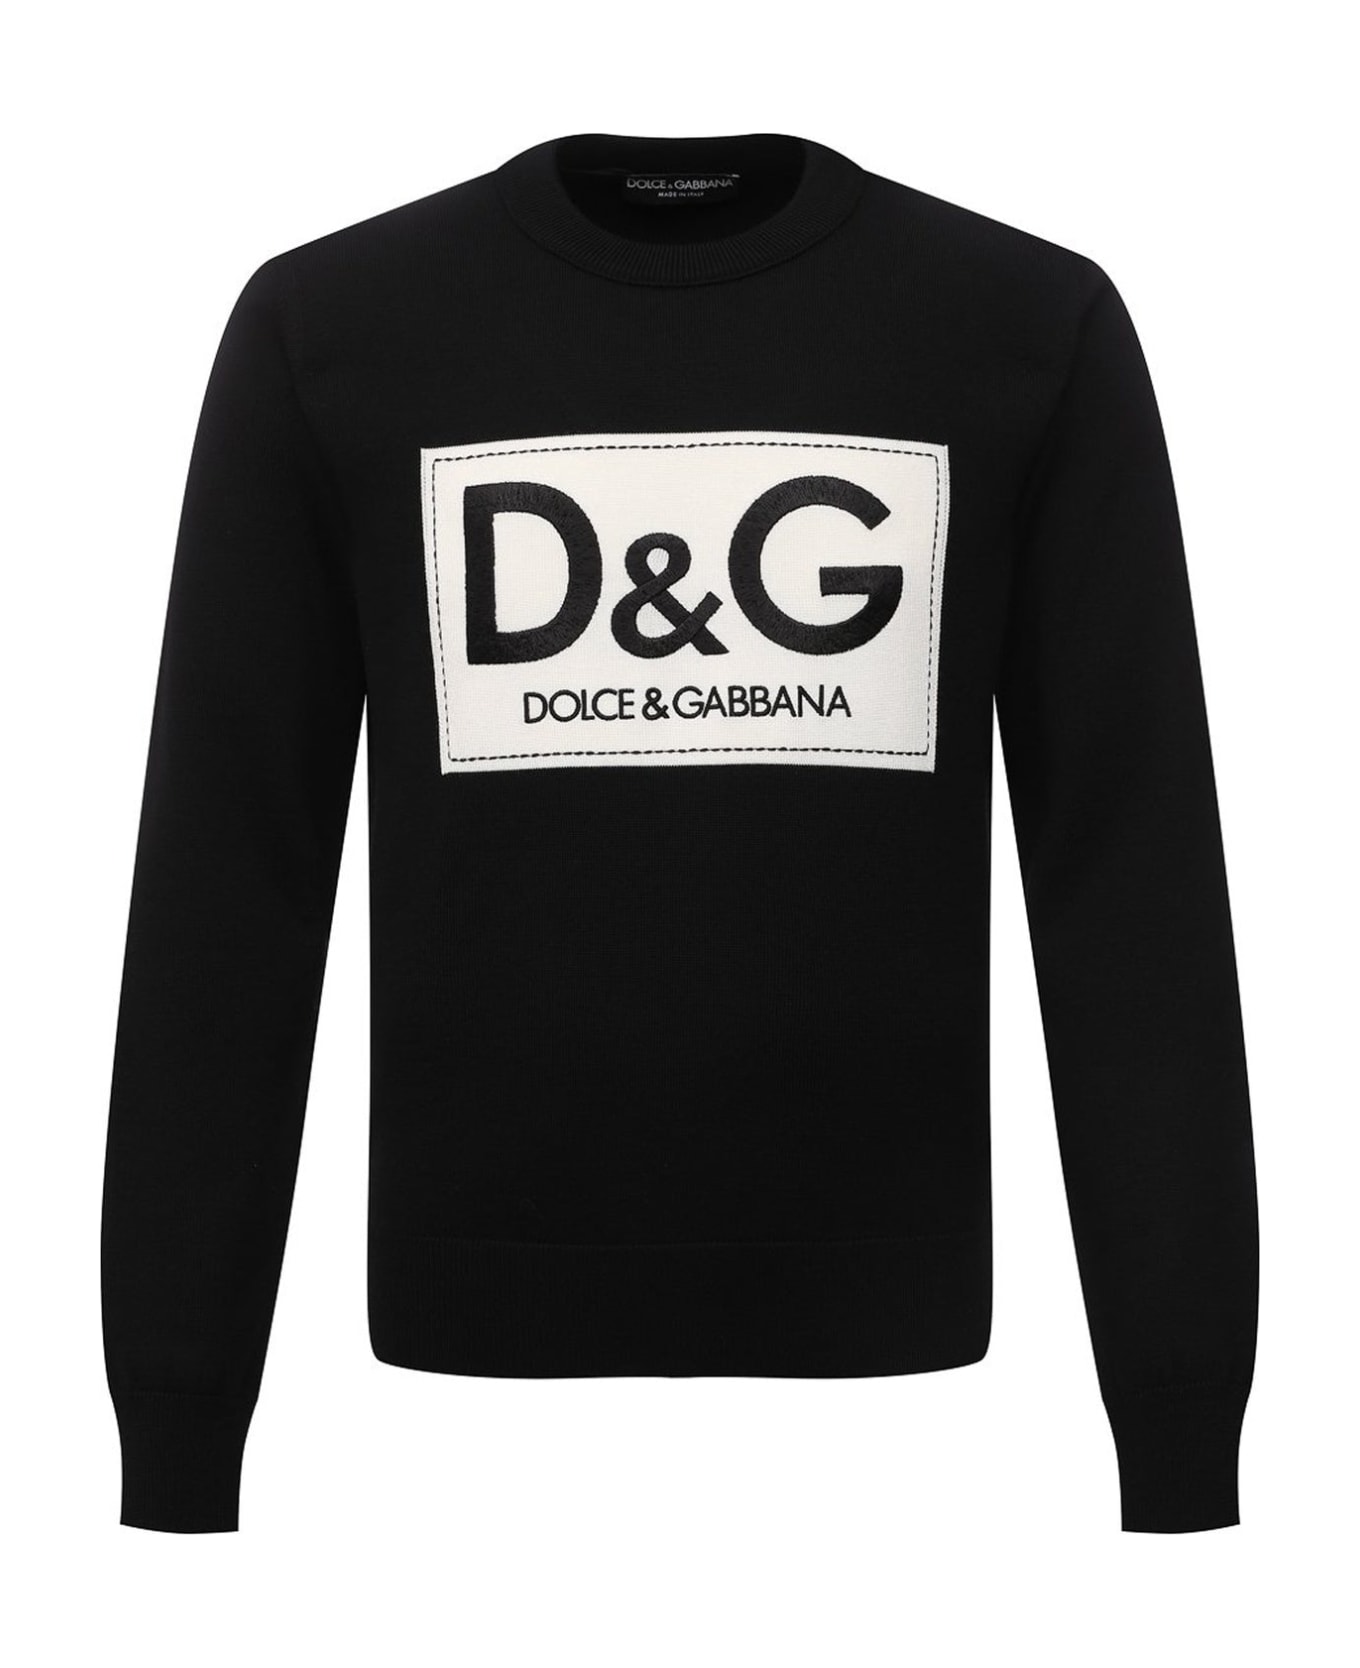 Dolce & Gabbana Dg Pullover - Black